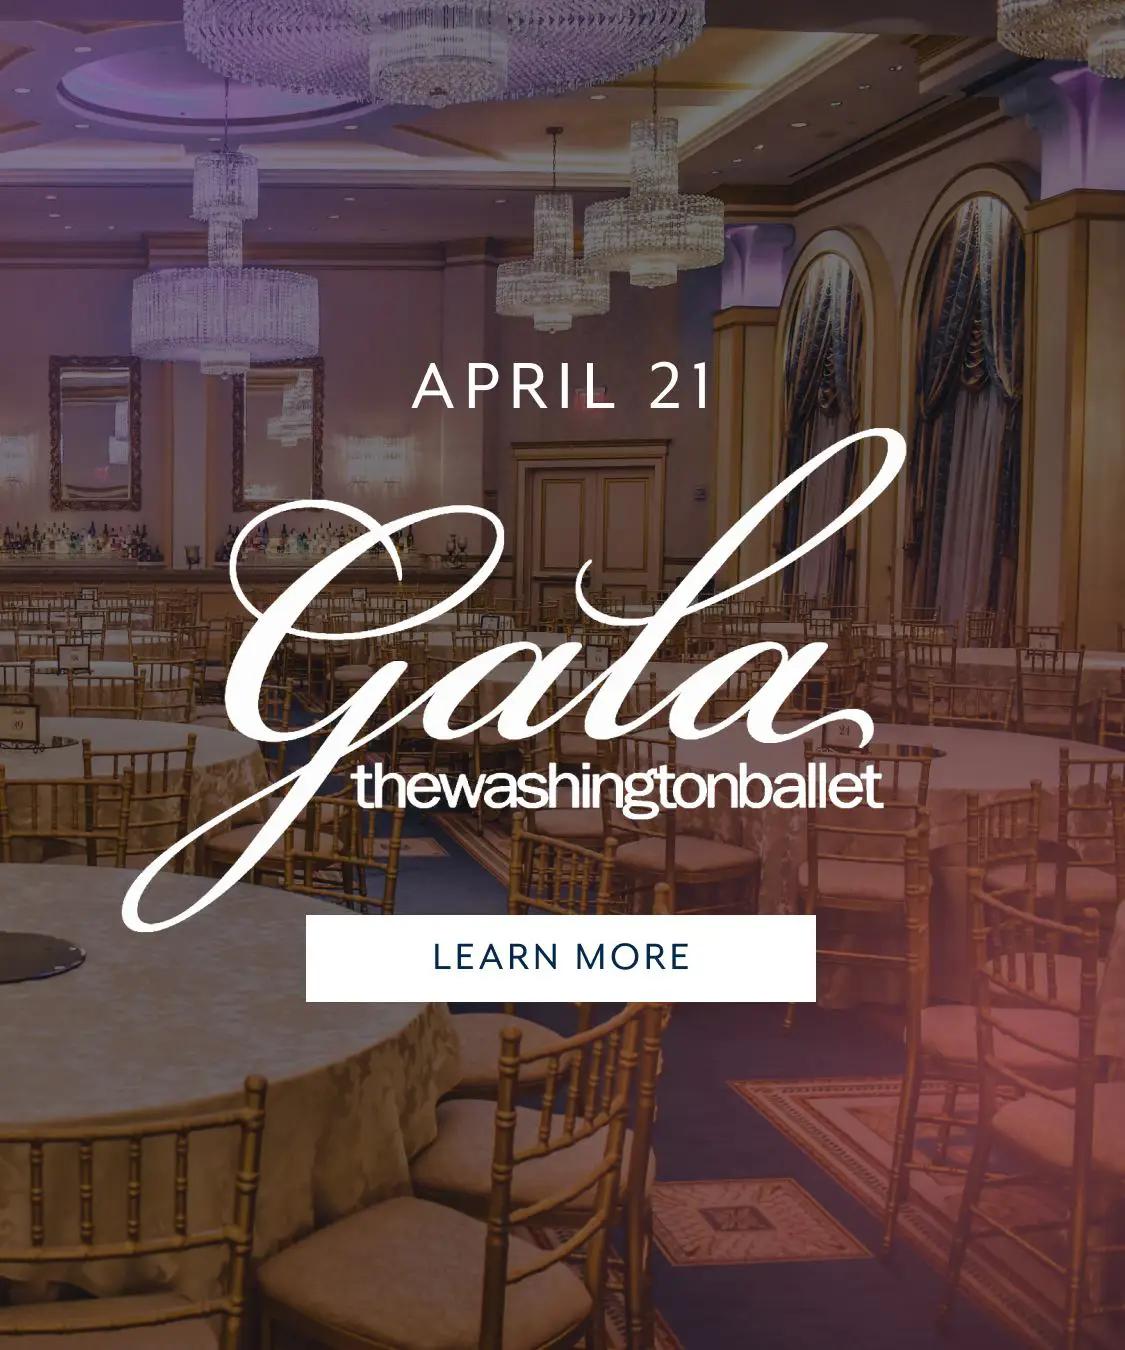 Mobile banner promoting The Washington Ballet Gala happening on April 21st